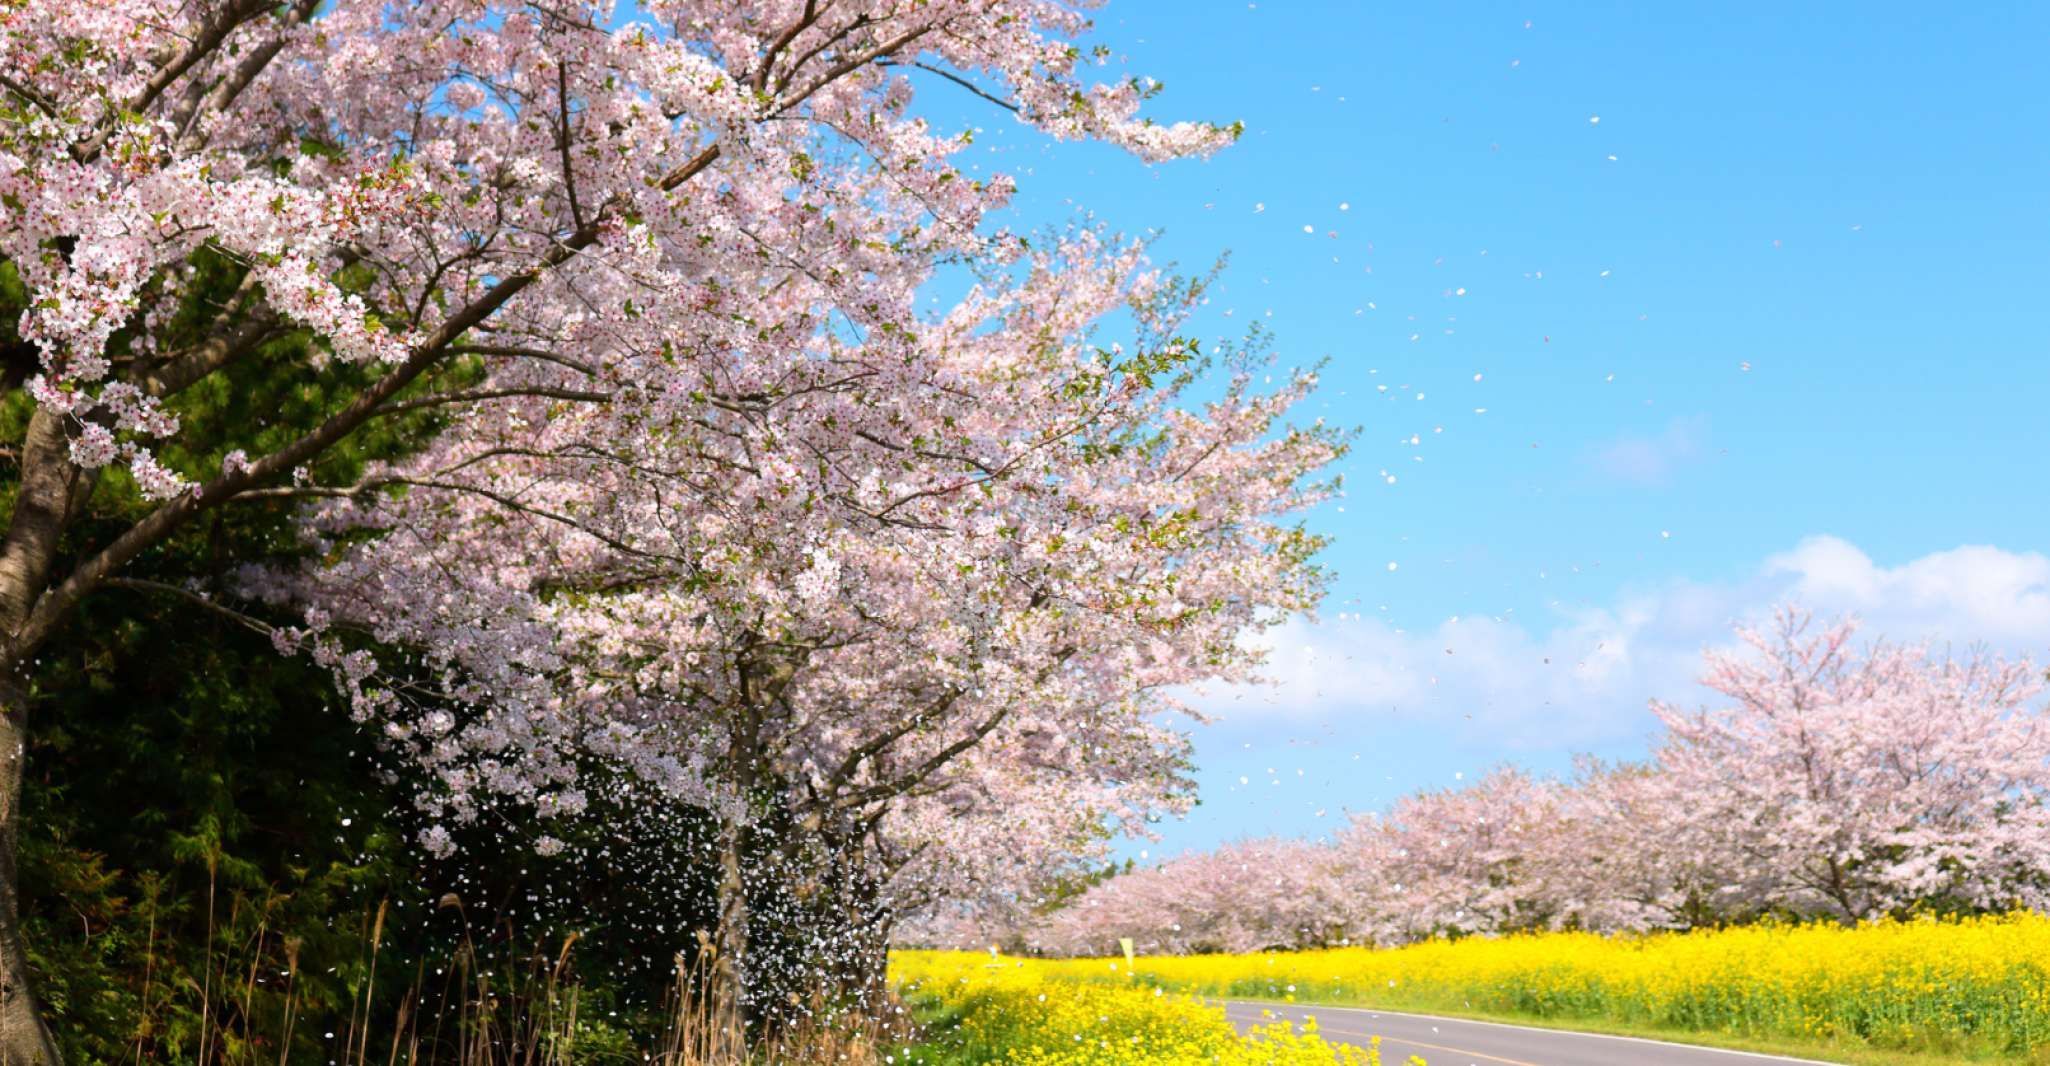 From Jeju City, East Jeju Cherry Blossom Day Tour by Van - Housity